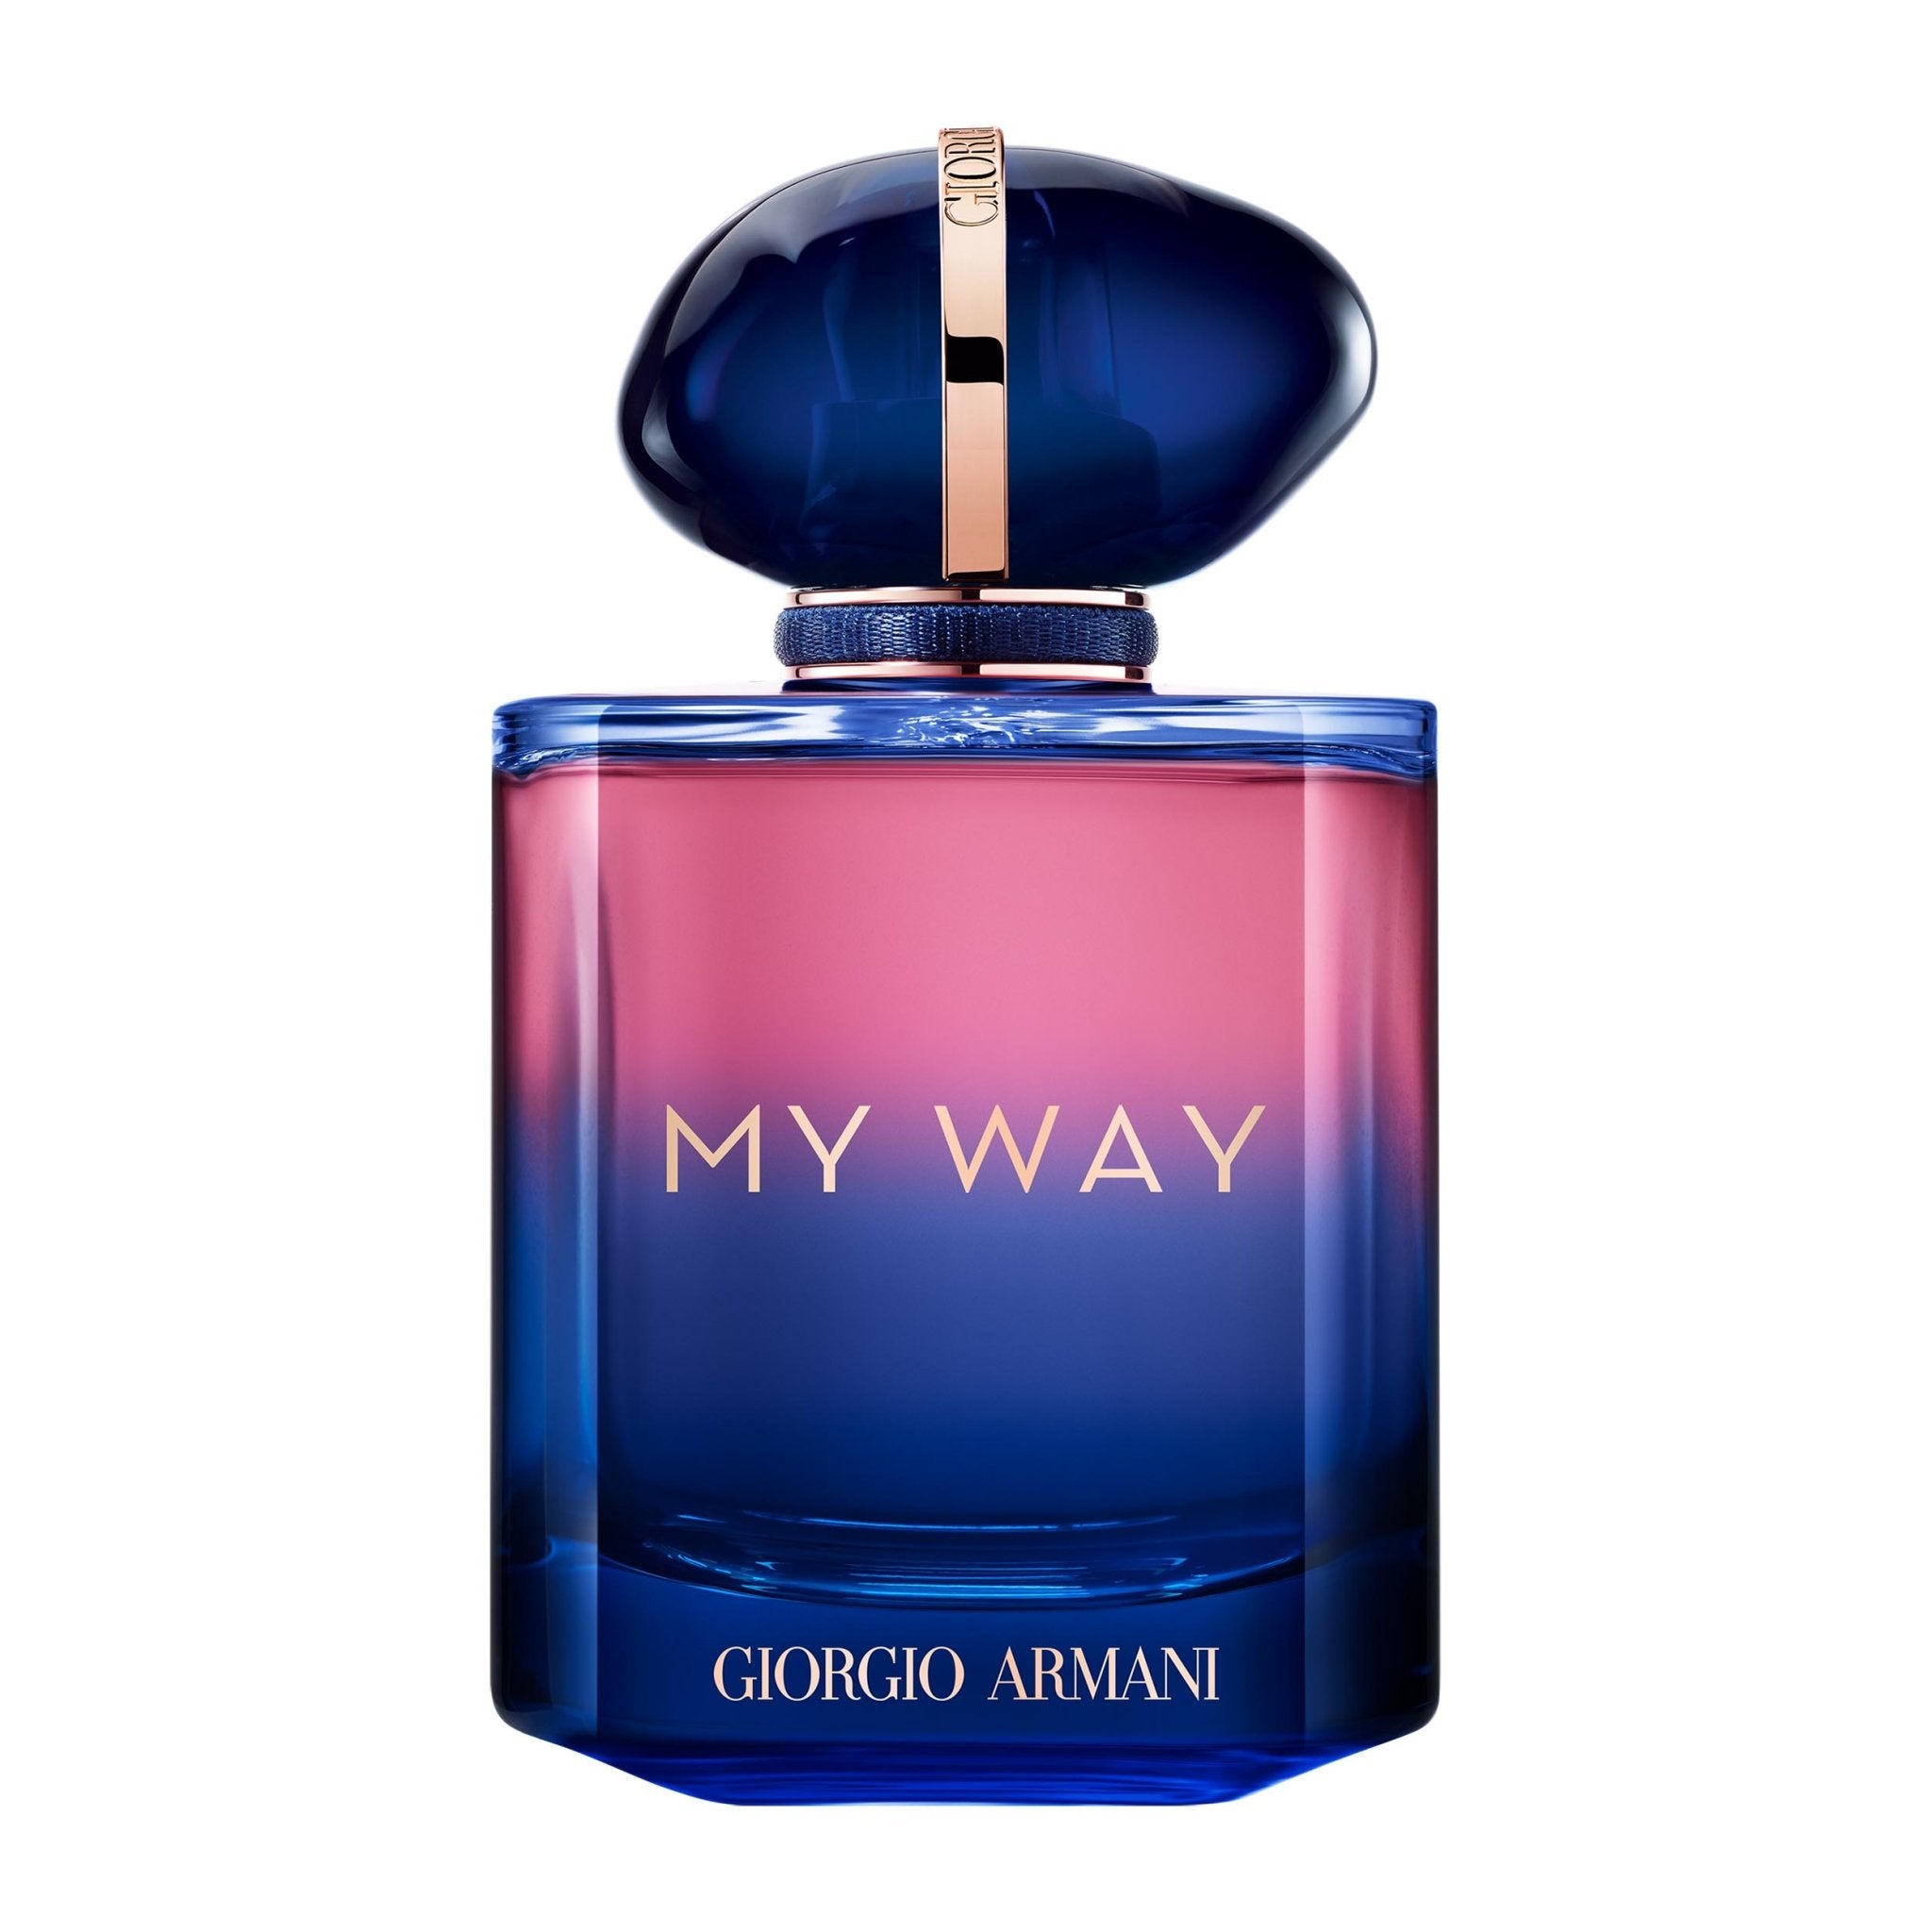 Giorgio Armani My Way Parfum For Women – 90ml - Bloom Pharmacy